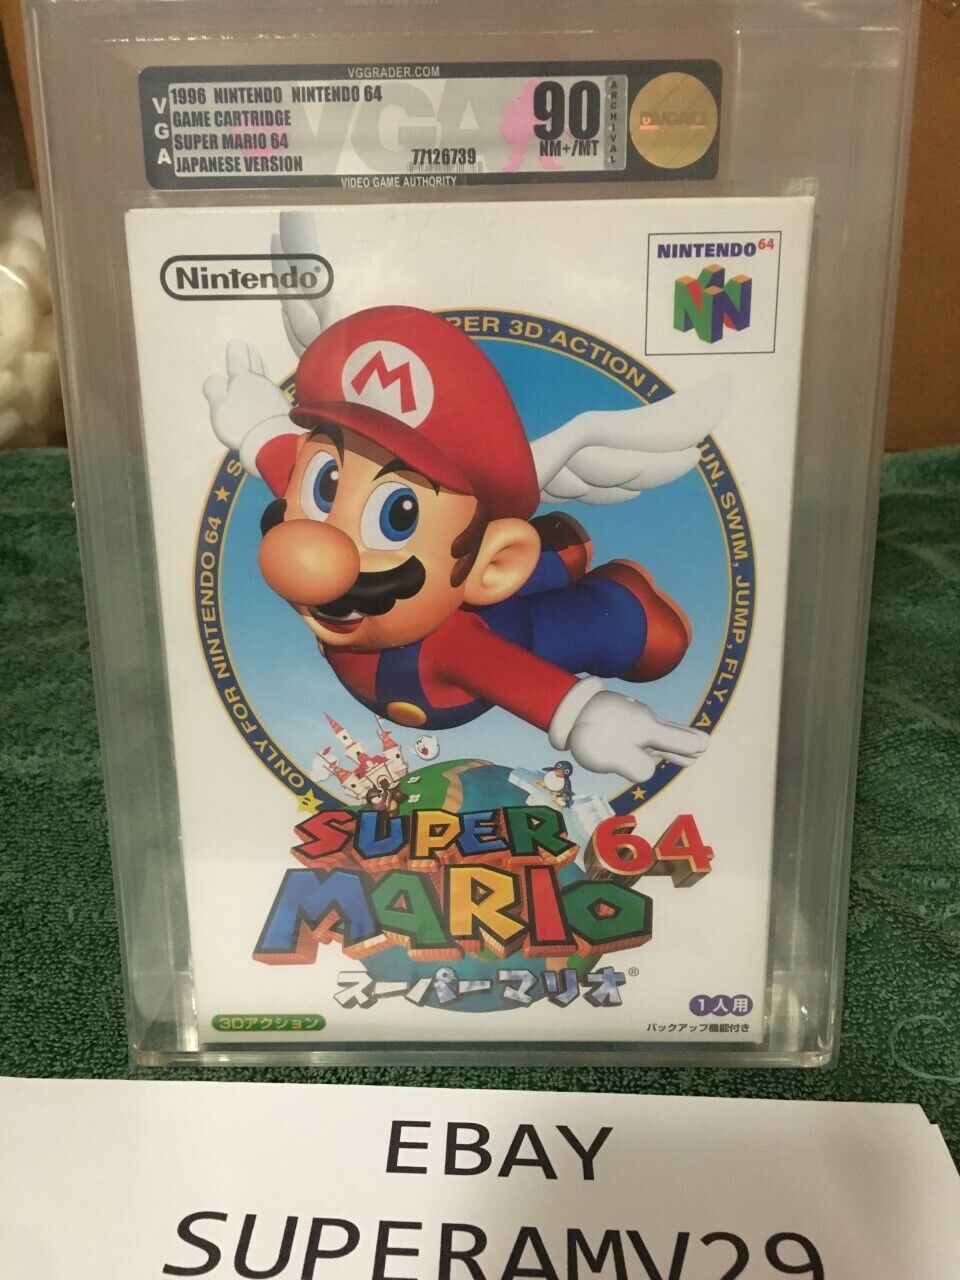 Super Mario 64 Nintendo N64 1996 JAPAN RELEASE VGA 90 1ST PRINT